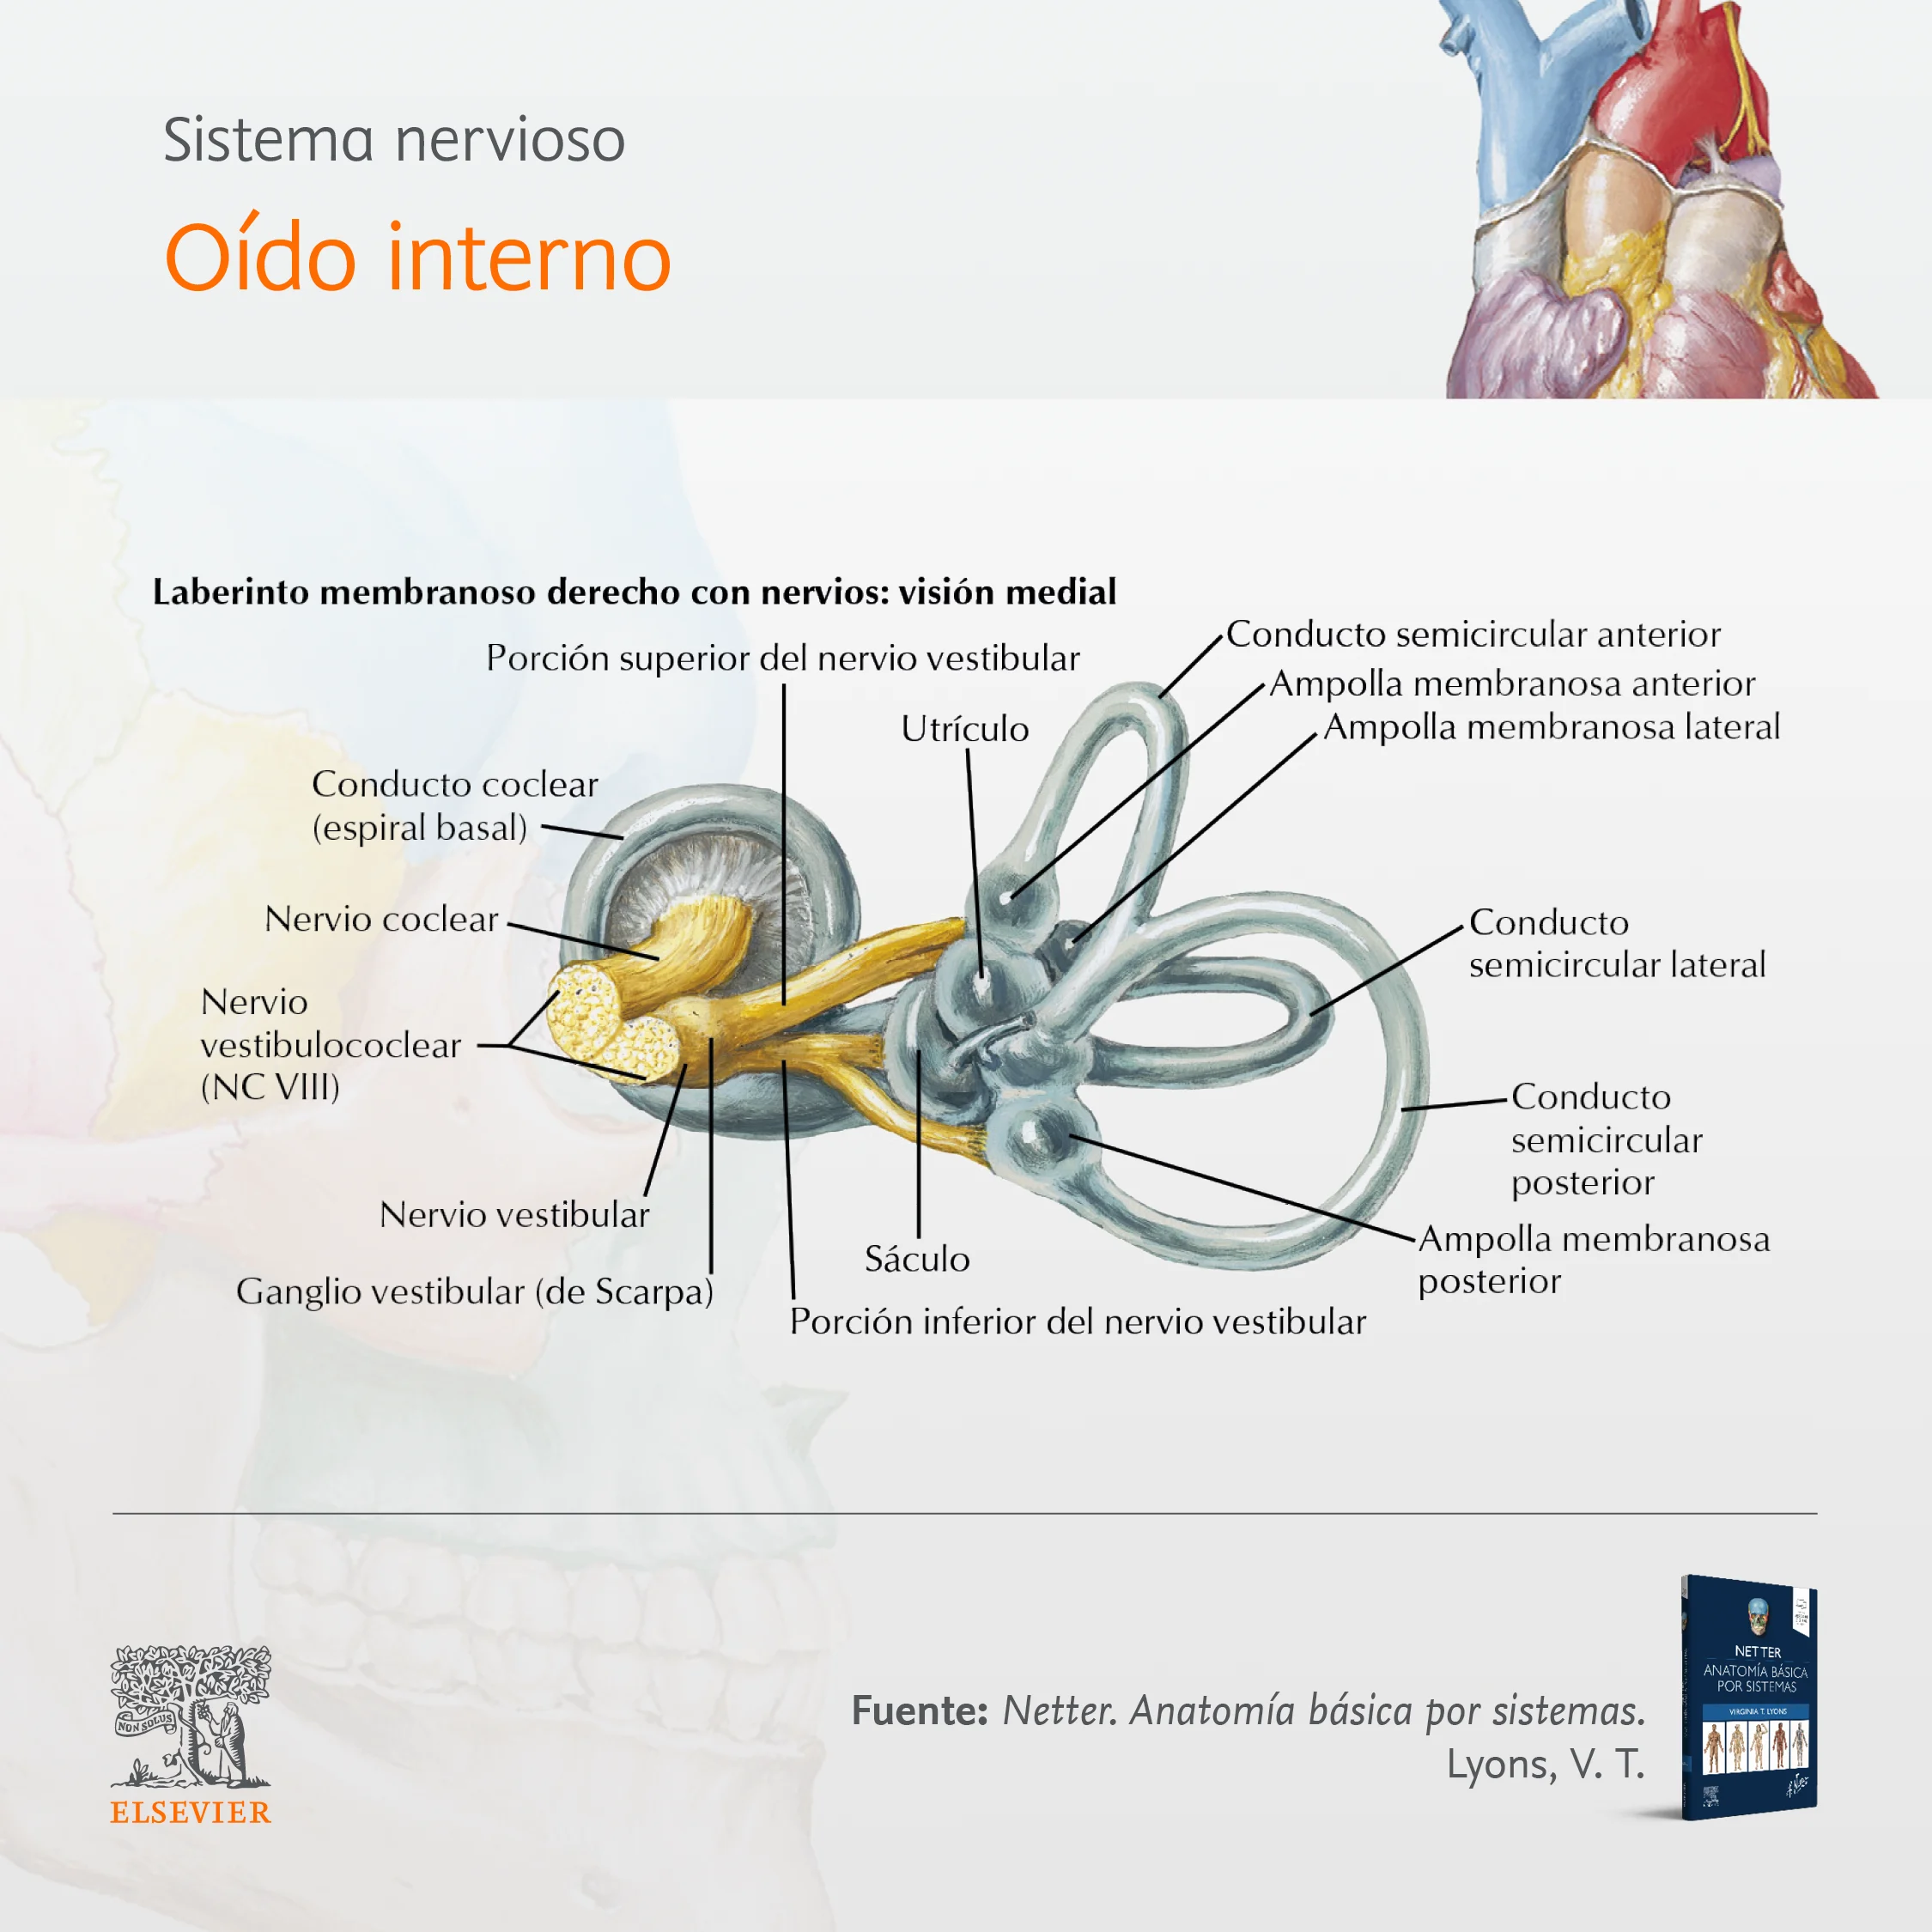 Sistema nervioso - Oído interno